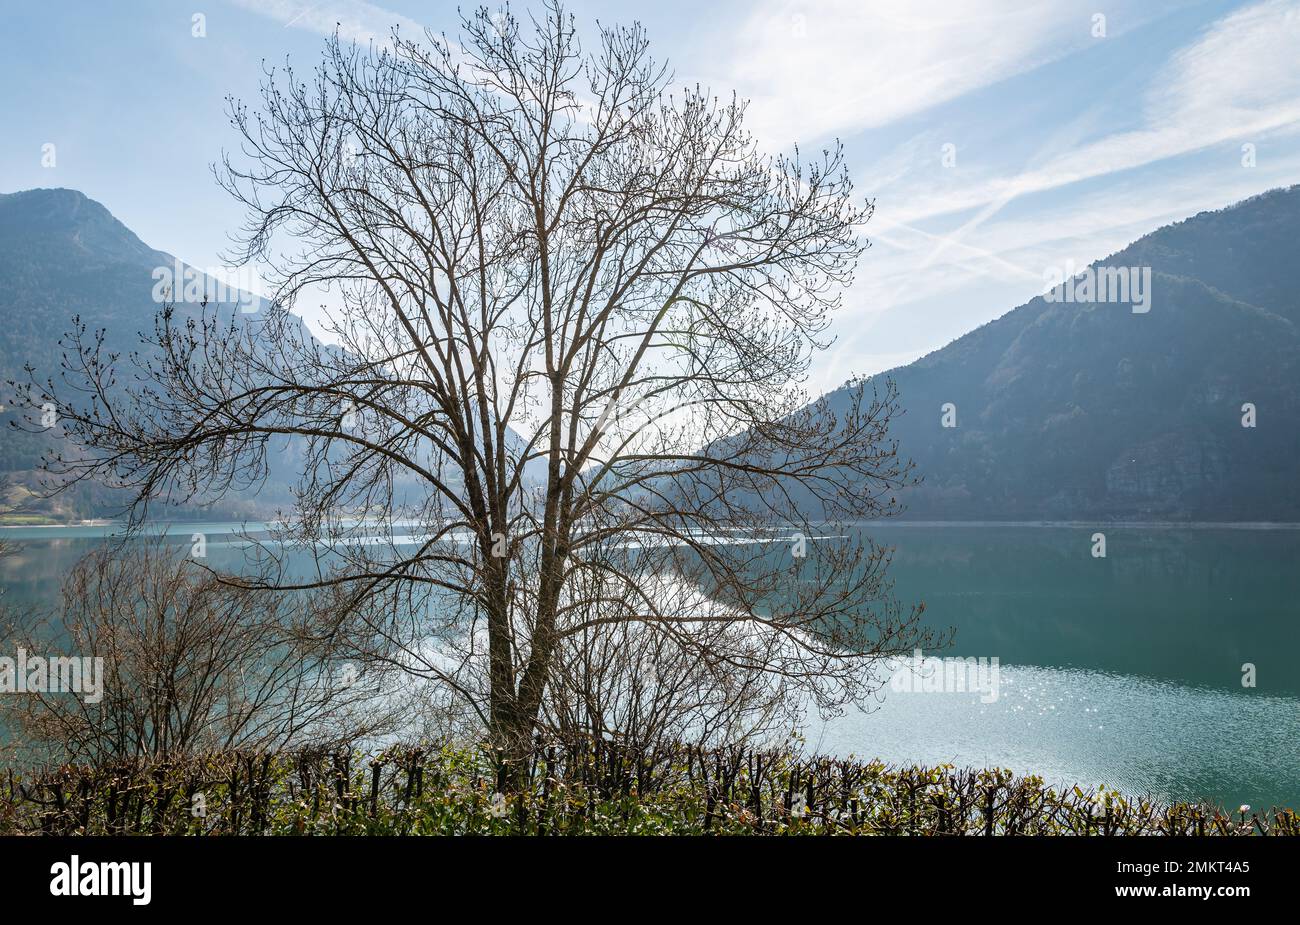 Ledro Lake in Ledro valley. Spring landscape. Trento province, Trentino Alto-Adige, Italy, Europe Stock Photo